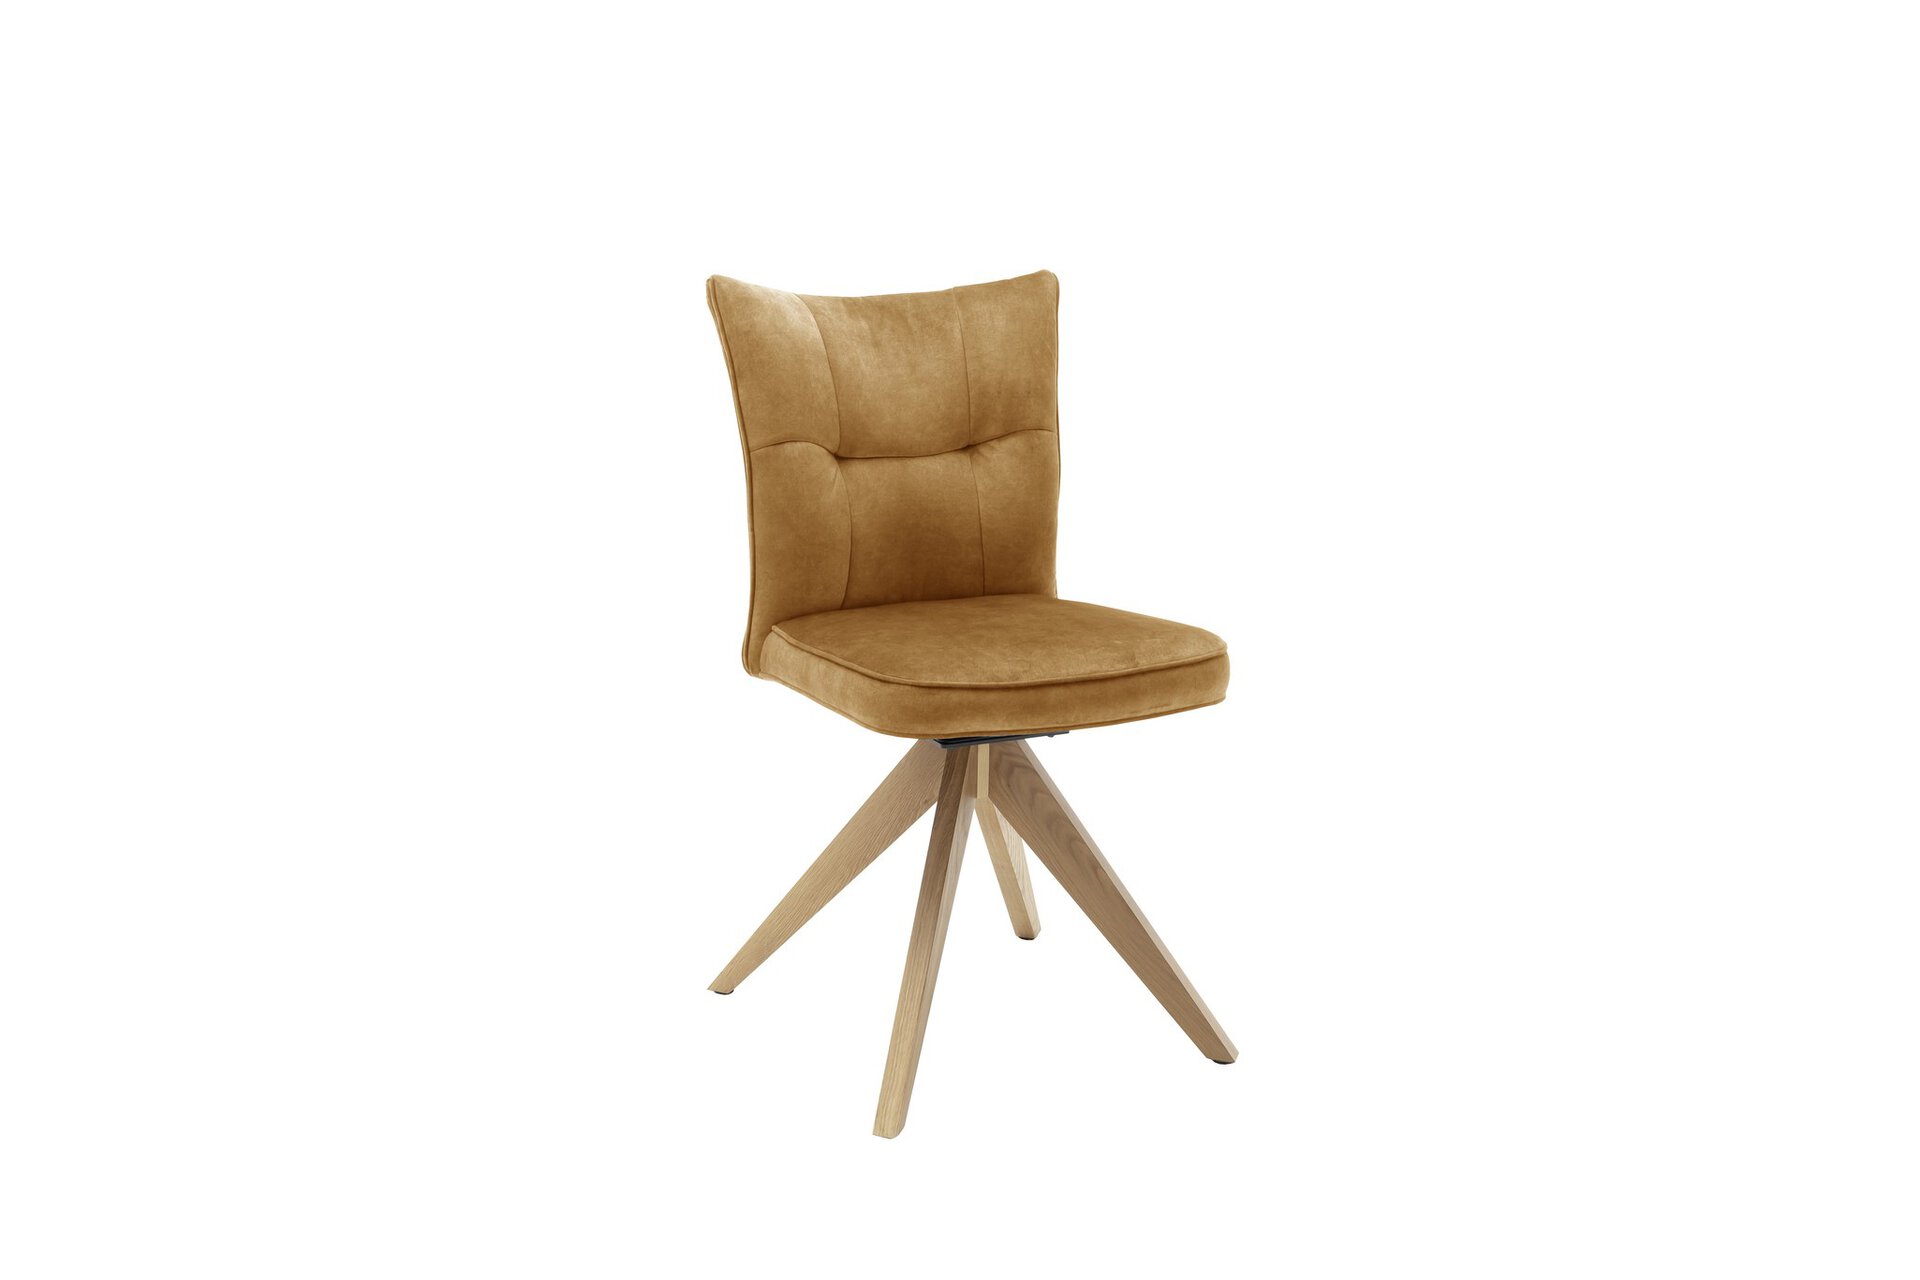 4-Fuß-Stuhl Holz MCA furniture | Möbel Inhofer | 4-Fuß-Stühle